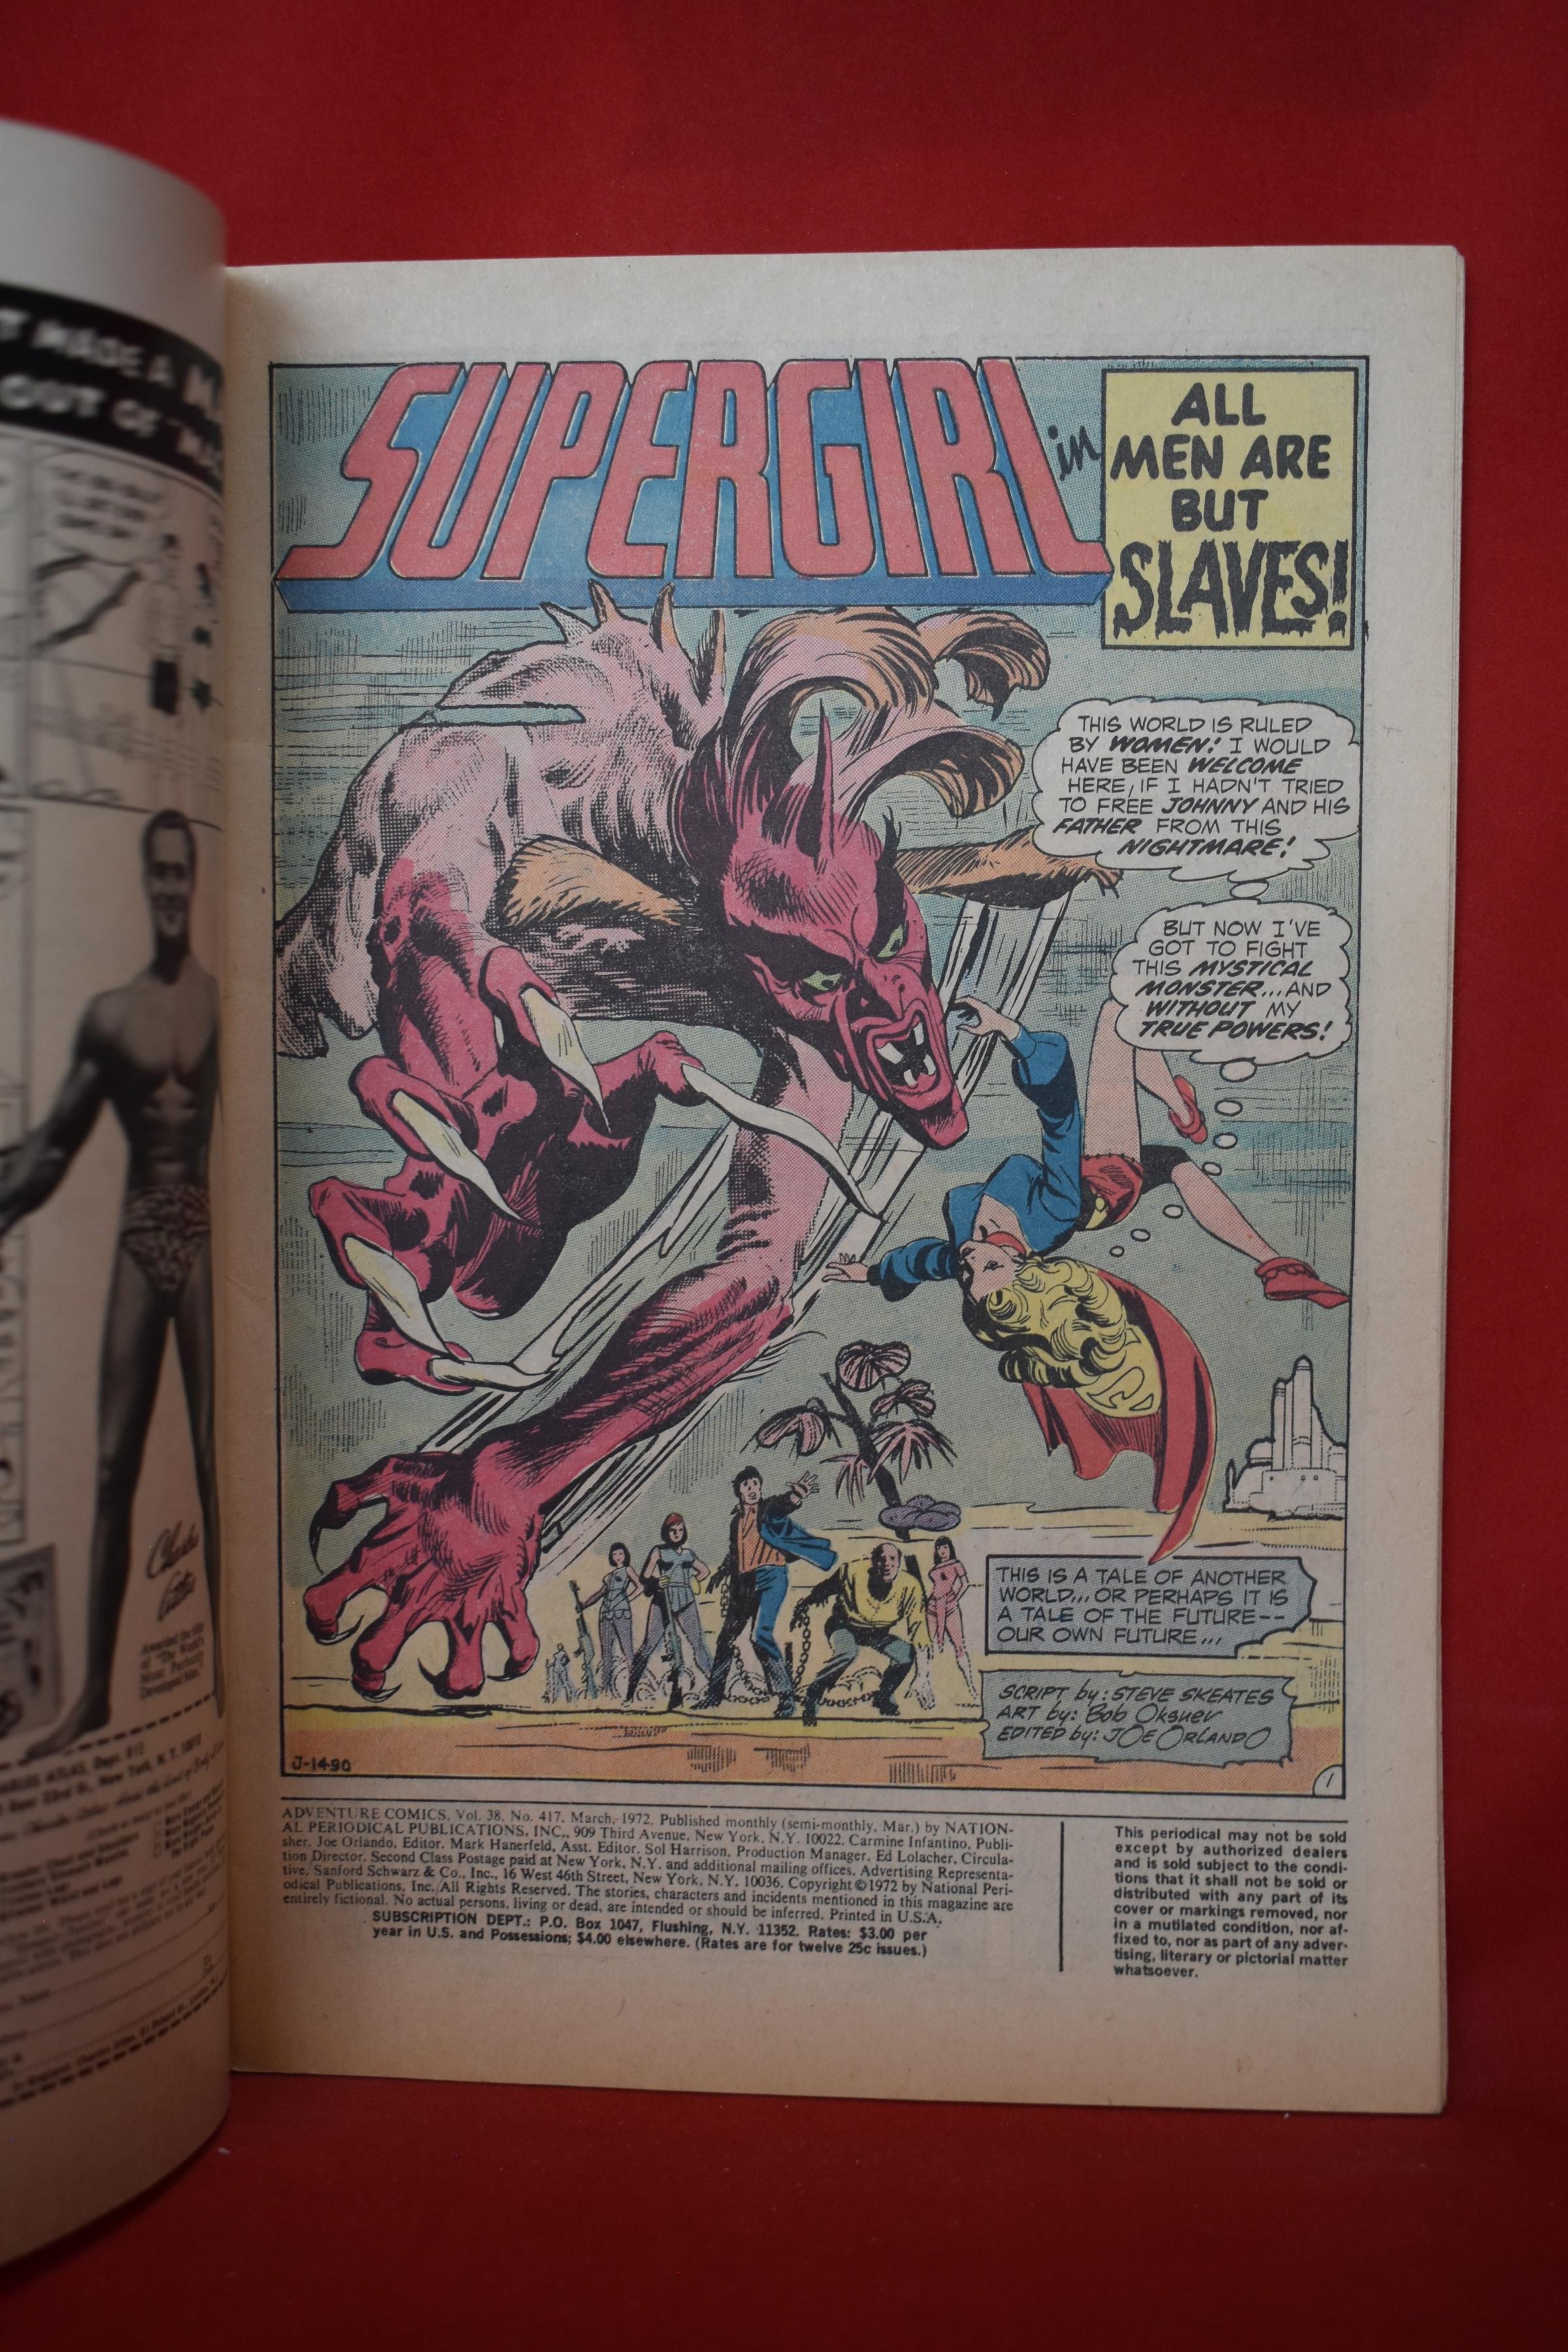 ADVENTURE COMICS #417 | SUPERGIRL - ALL MEN ARE BUT SLAVES! | BOB OKSNER - 1972